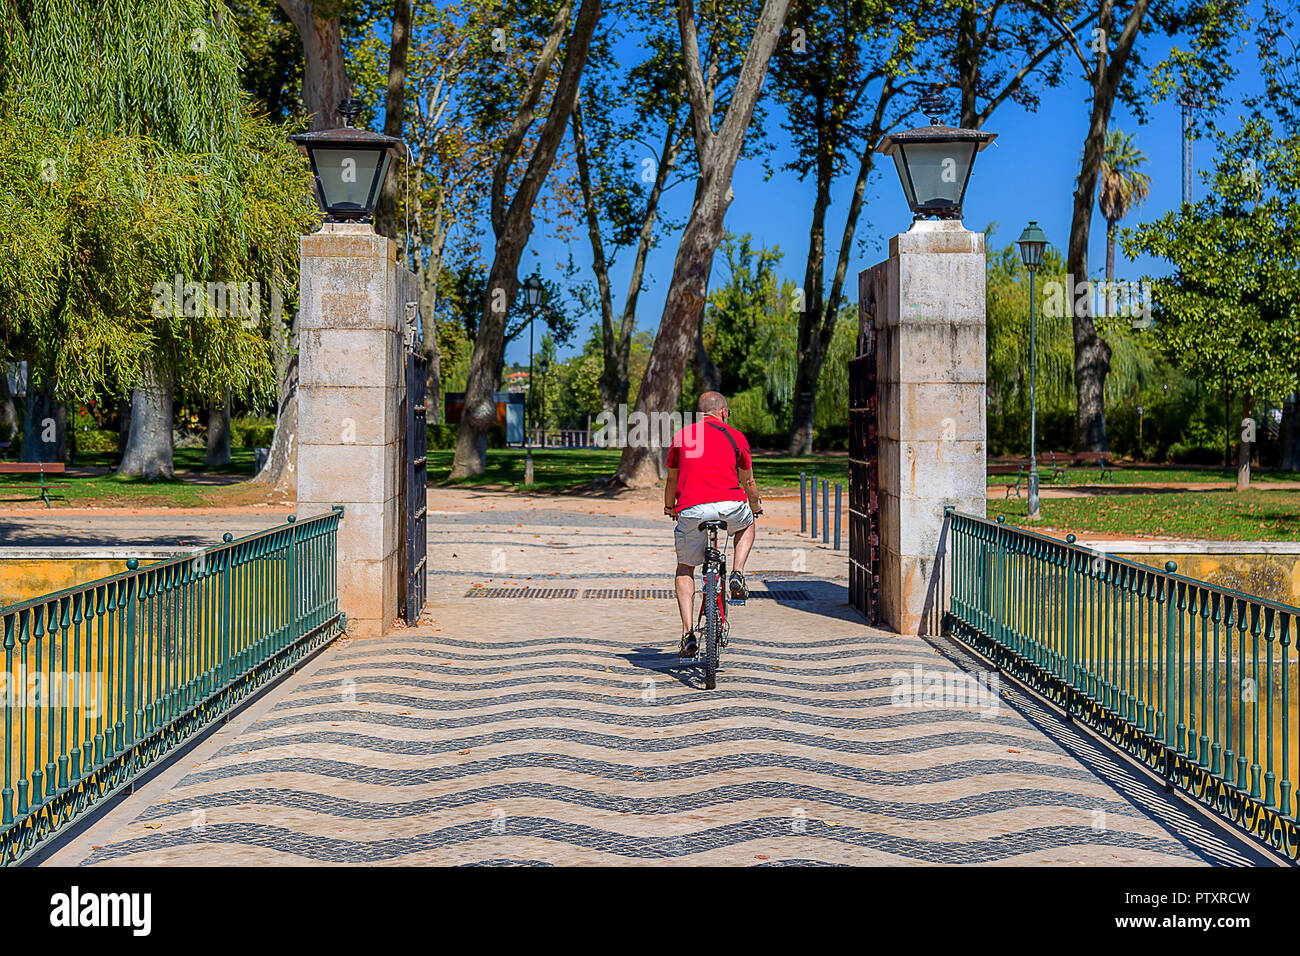 Man Ridding a Bike on a Public Park Bridge under a Blue Sky Stock Photo